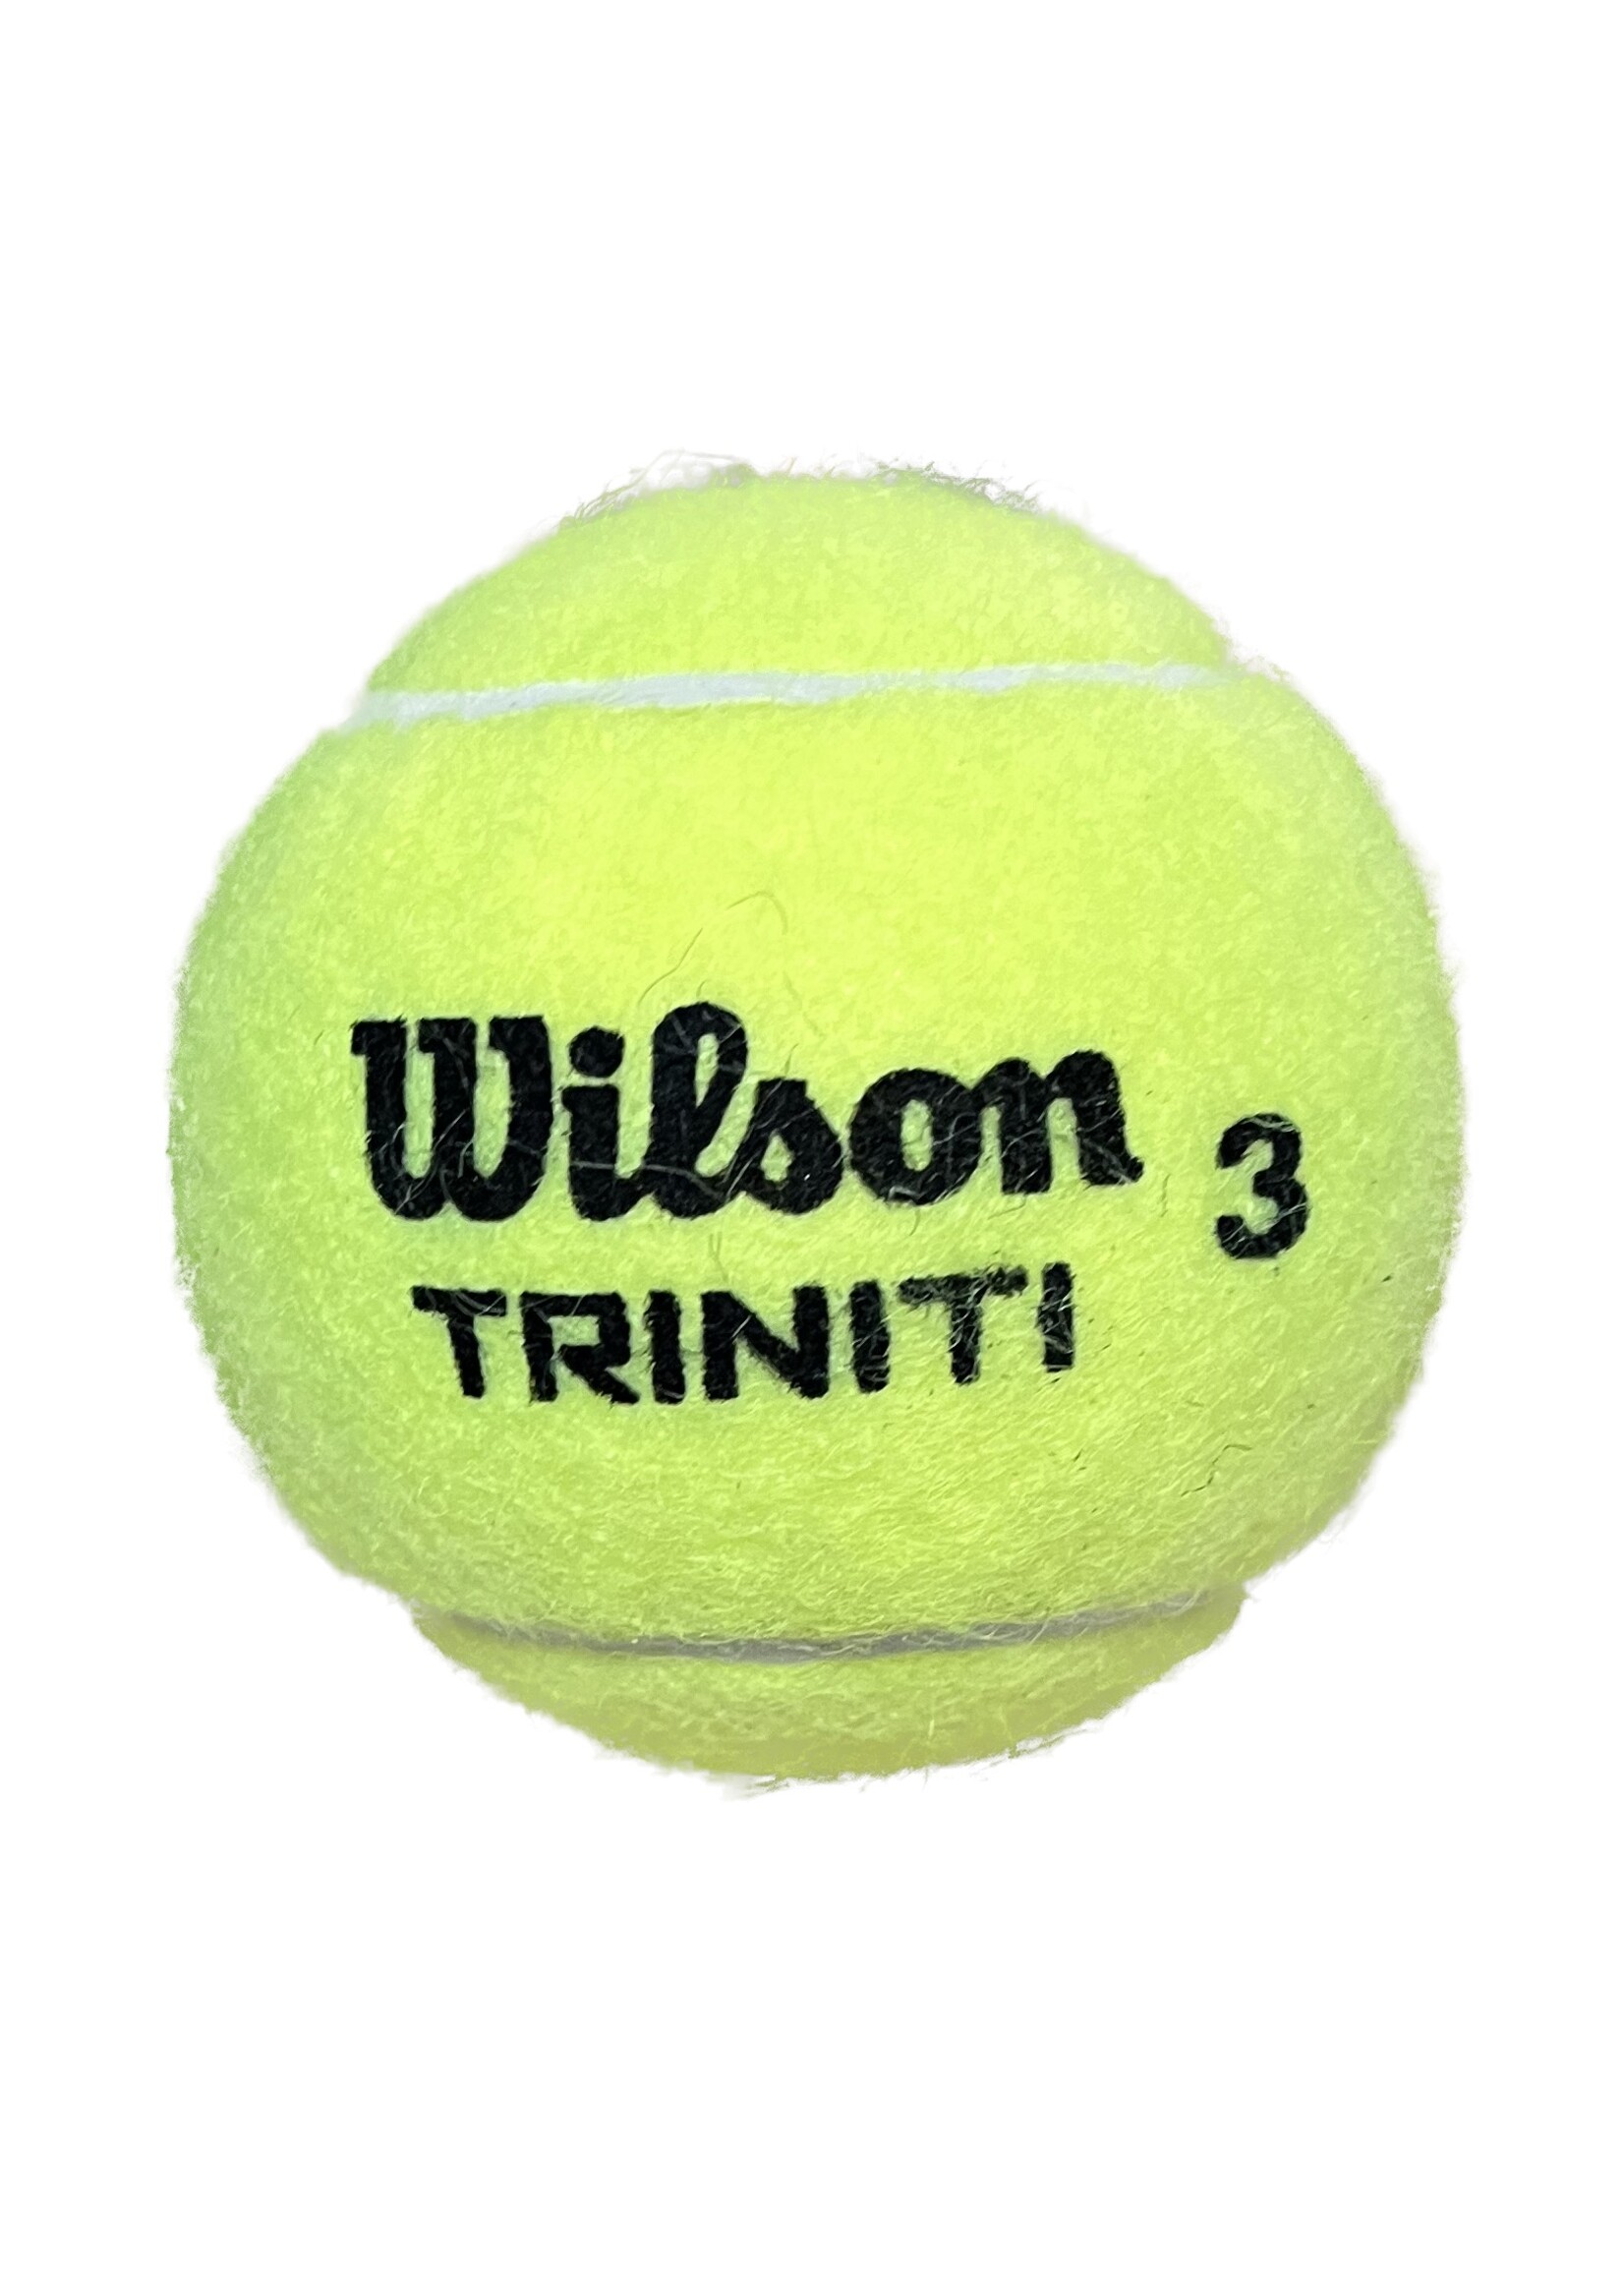 Wilson W Triniti Club Ball 72 Ball Box USPTA Logo Case